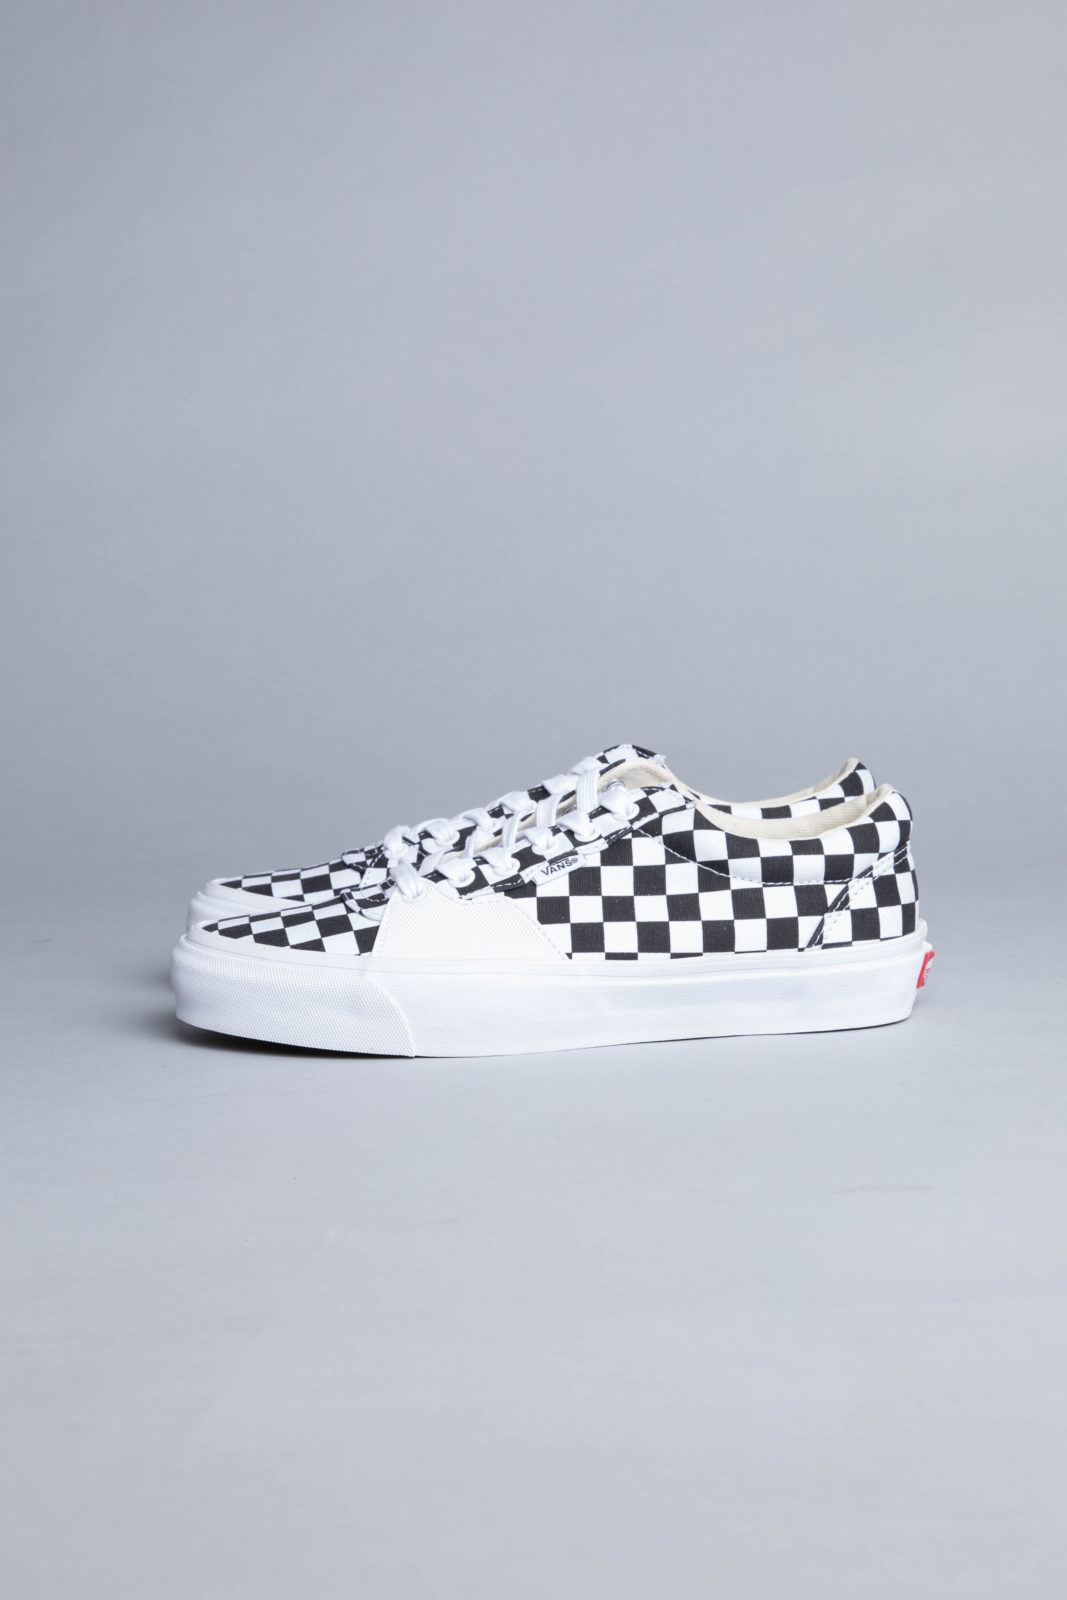 Vans Style 205 Checkerboard Black/True White • Centreville Store